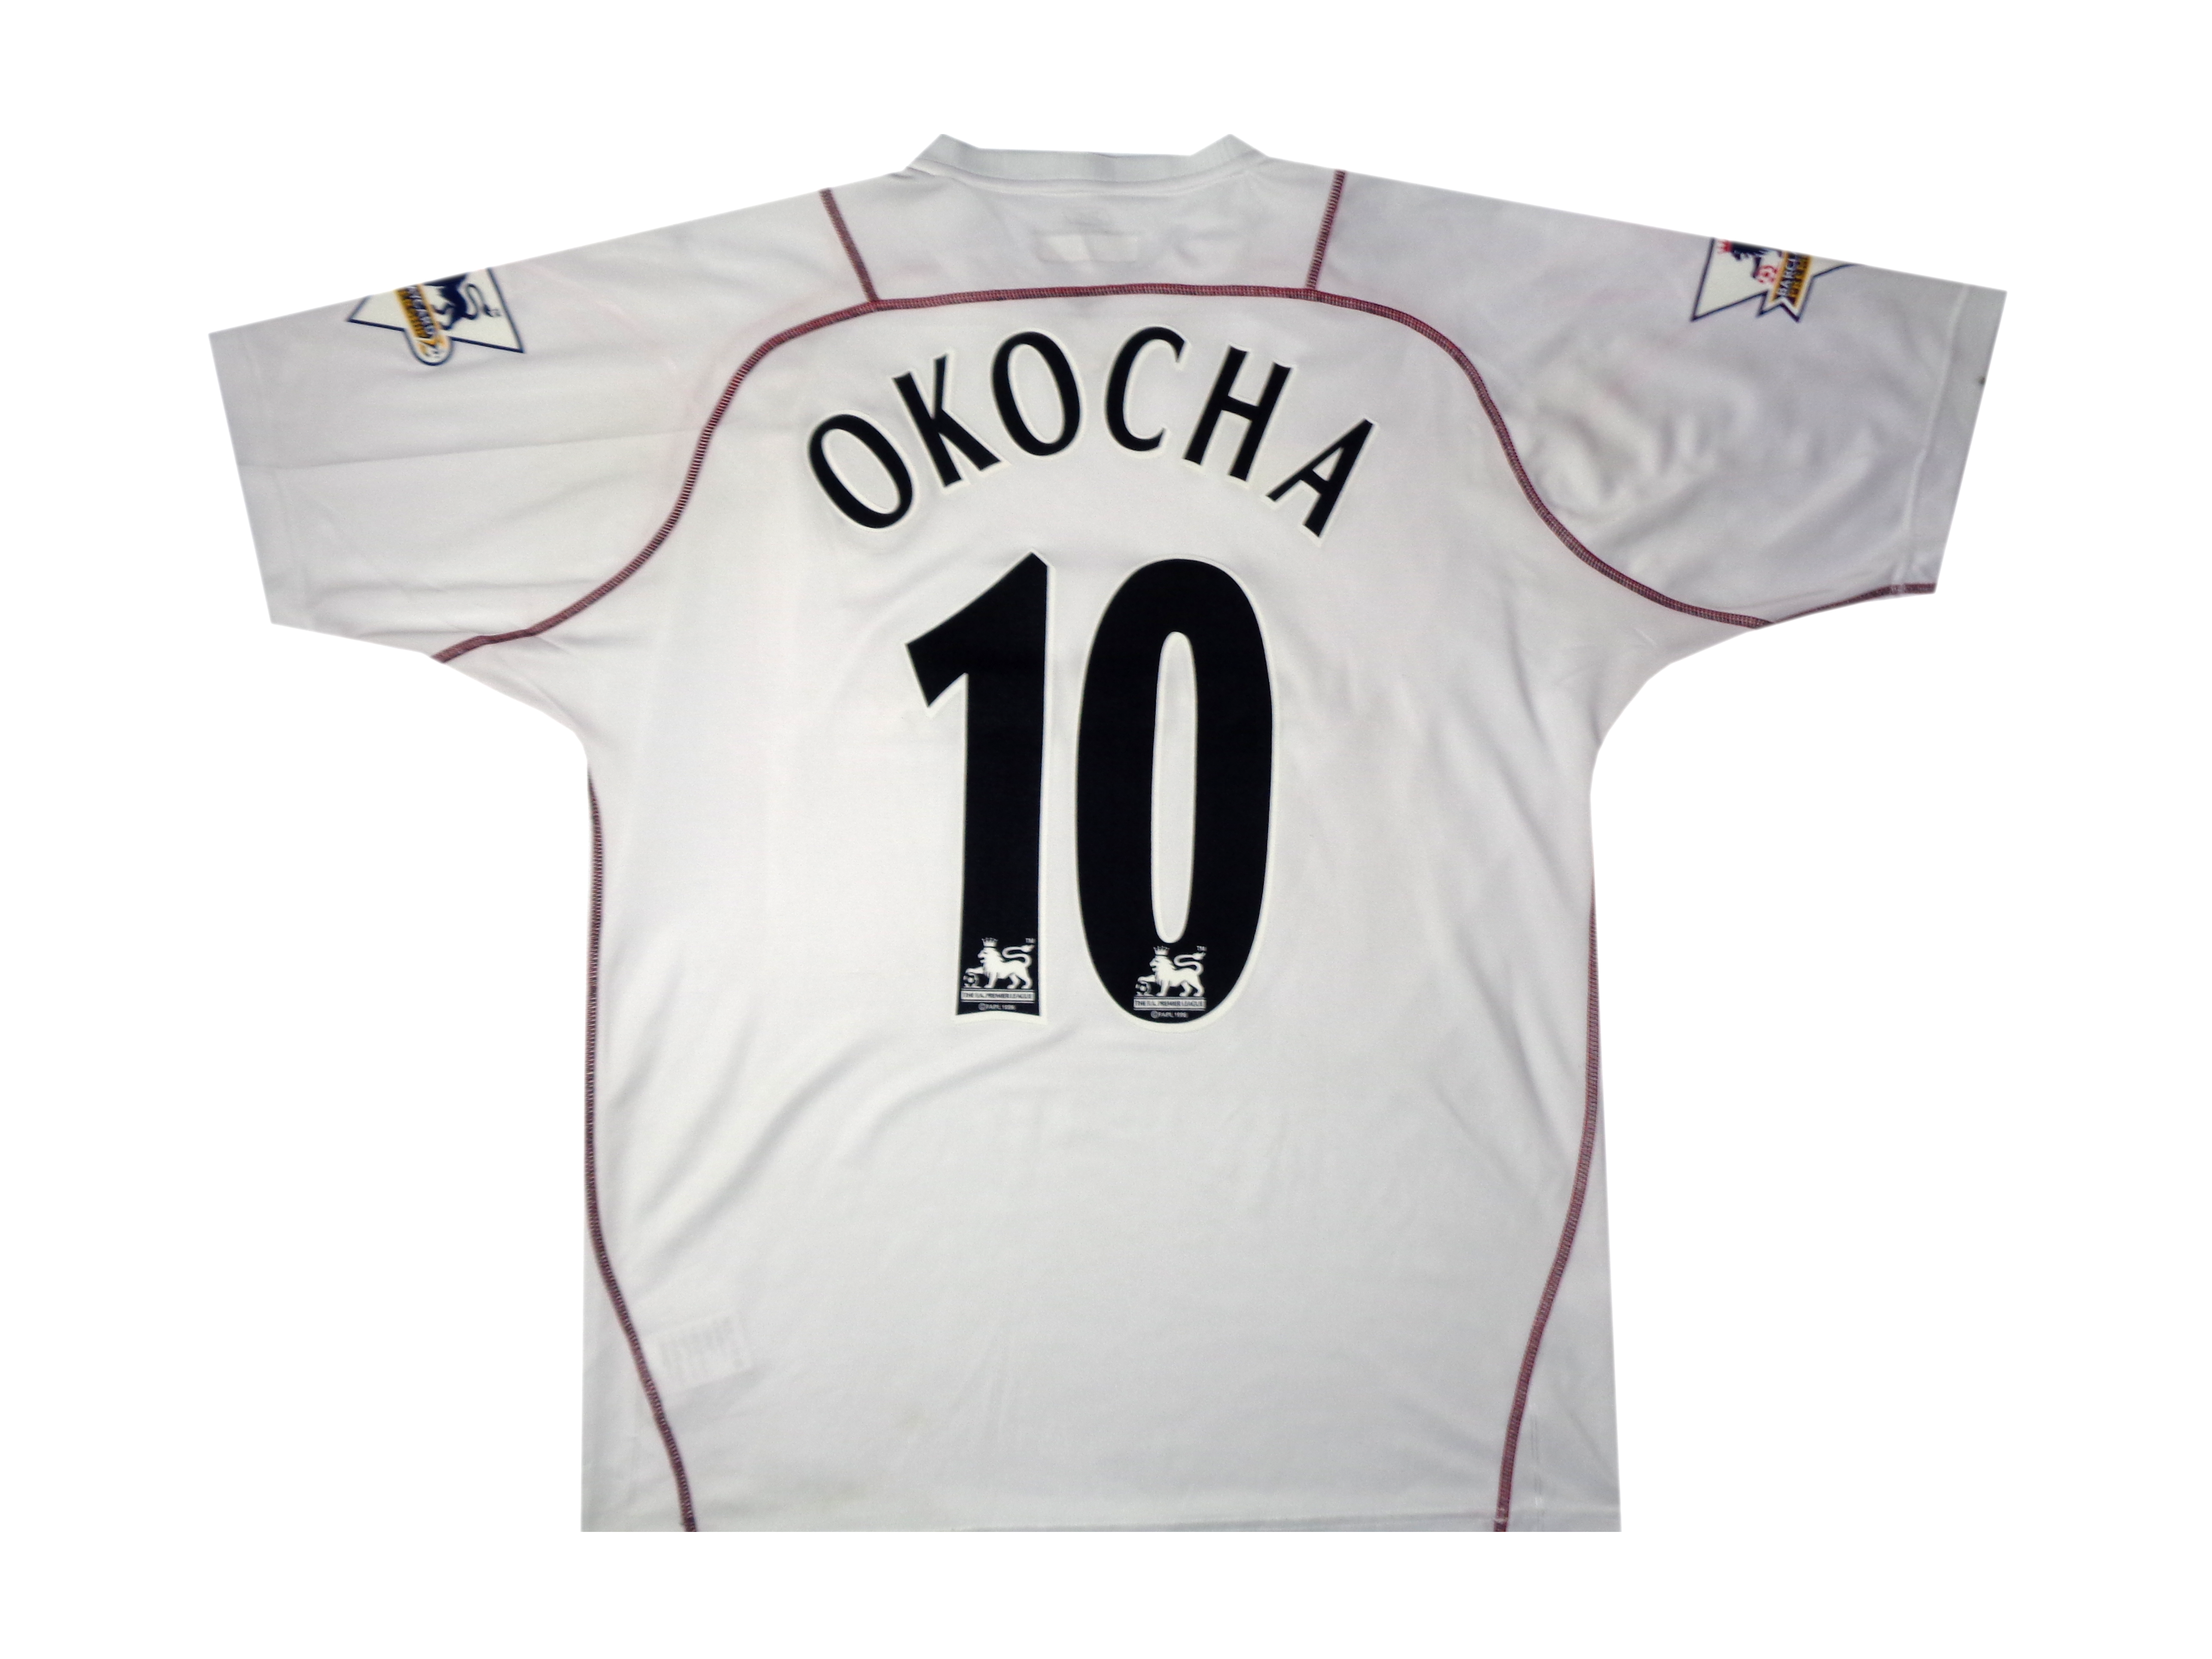 Okocha 10 Bolton Wanderers 03 04 Shirt Reebok Size Medium Ha7 Classical Shirts